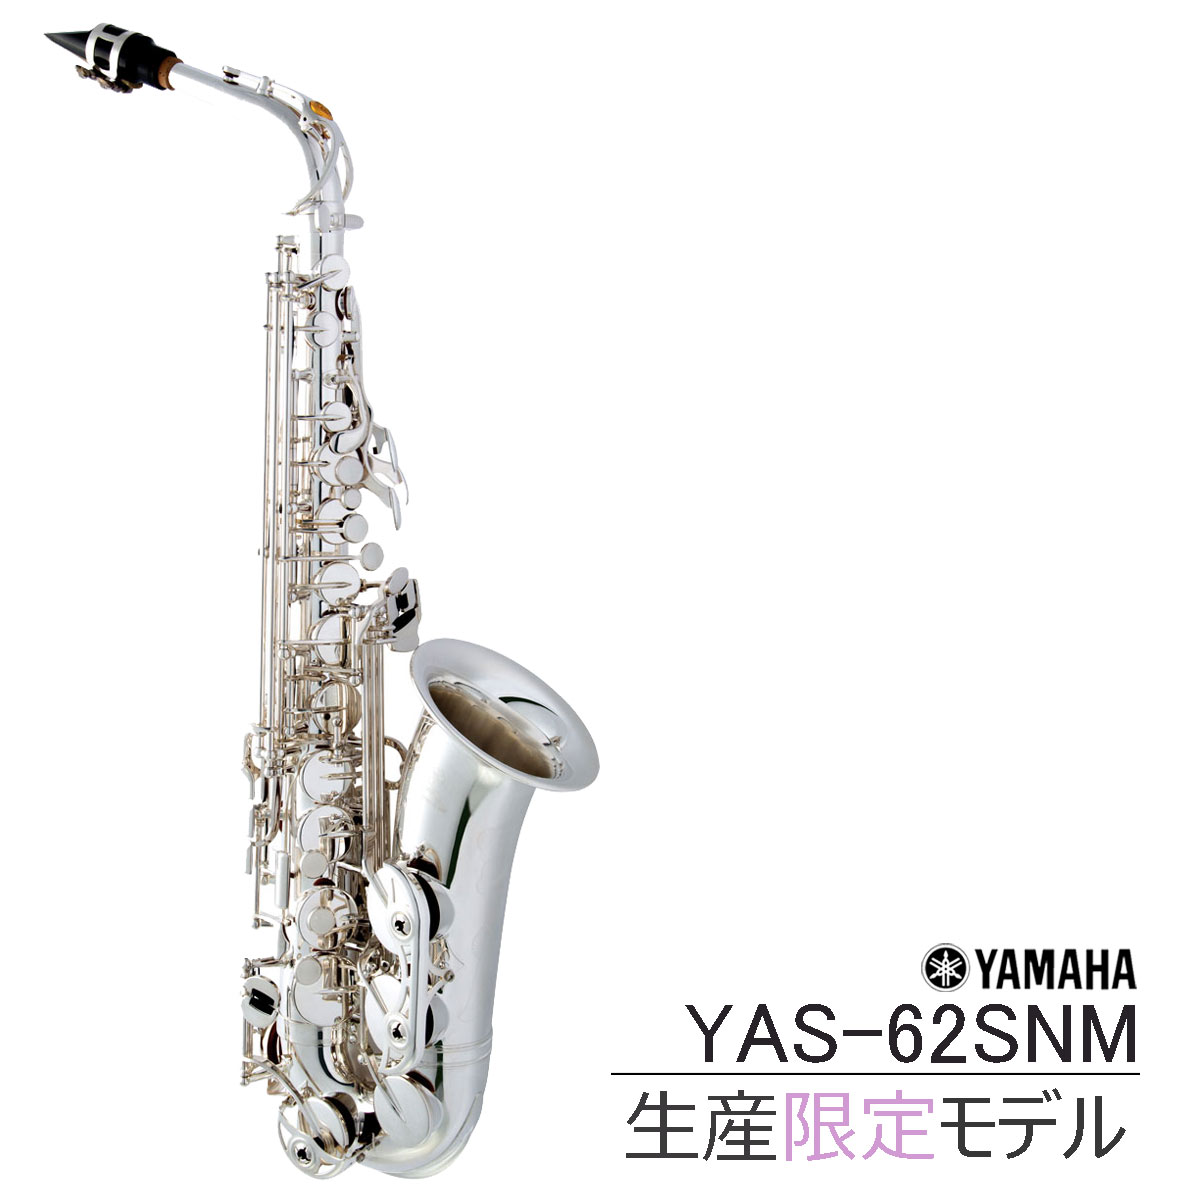 YAMAHA / YAS-62SNM ヤマハ アルトサックス 銀メッキ仕上 限定生産モデル